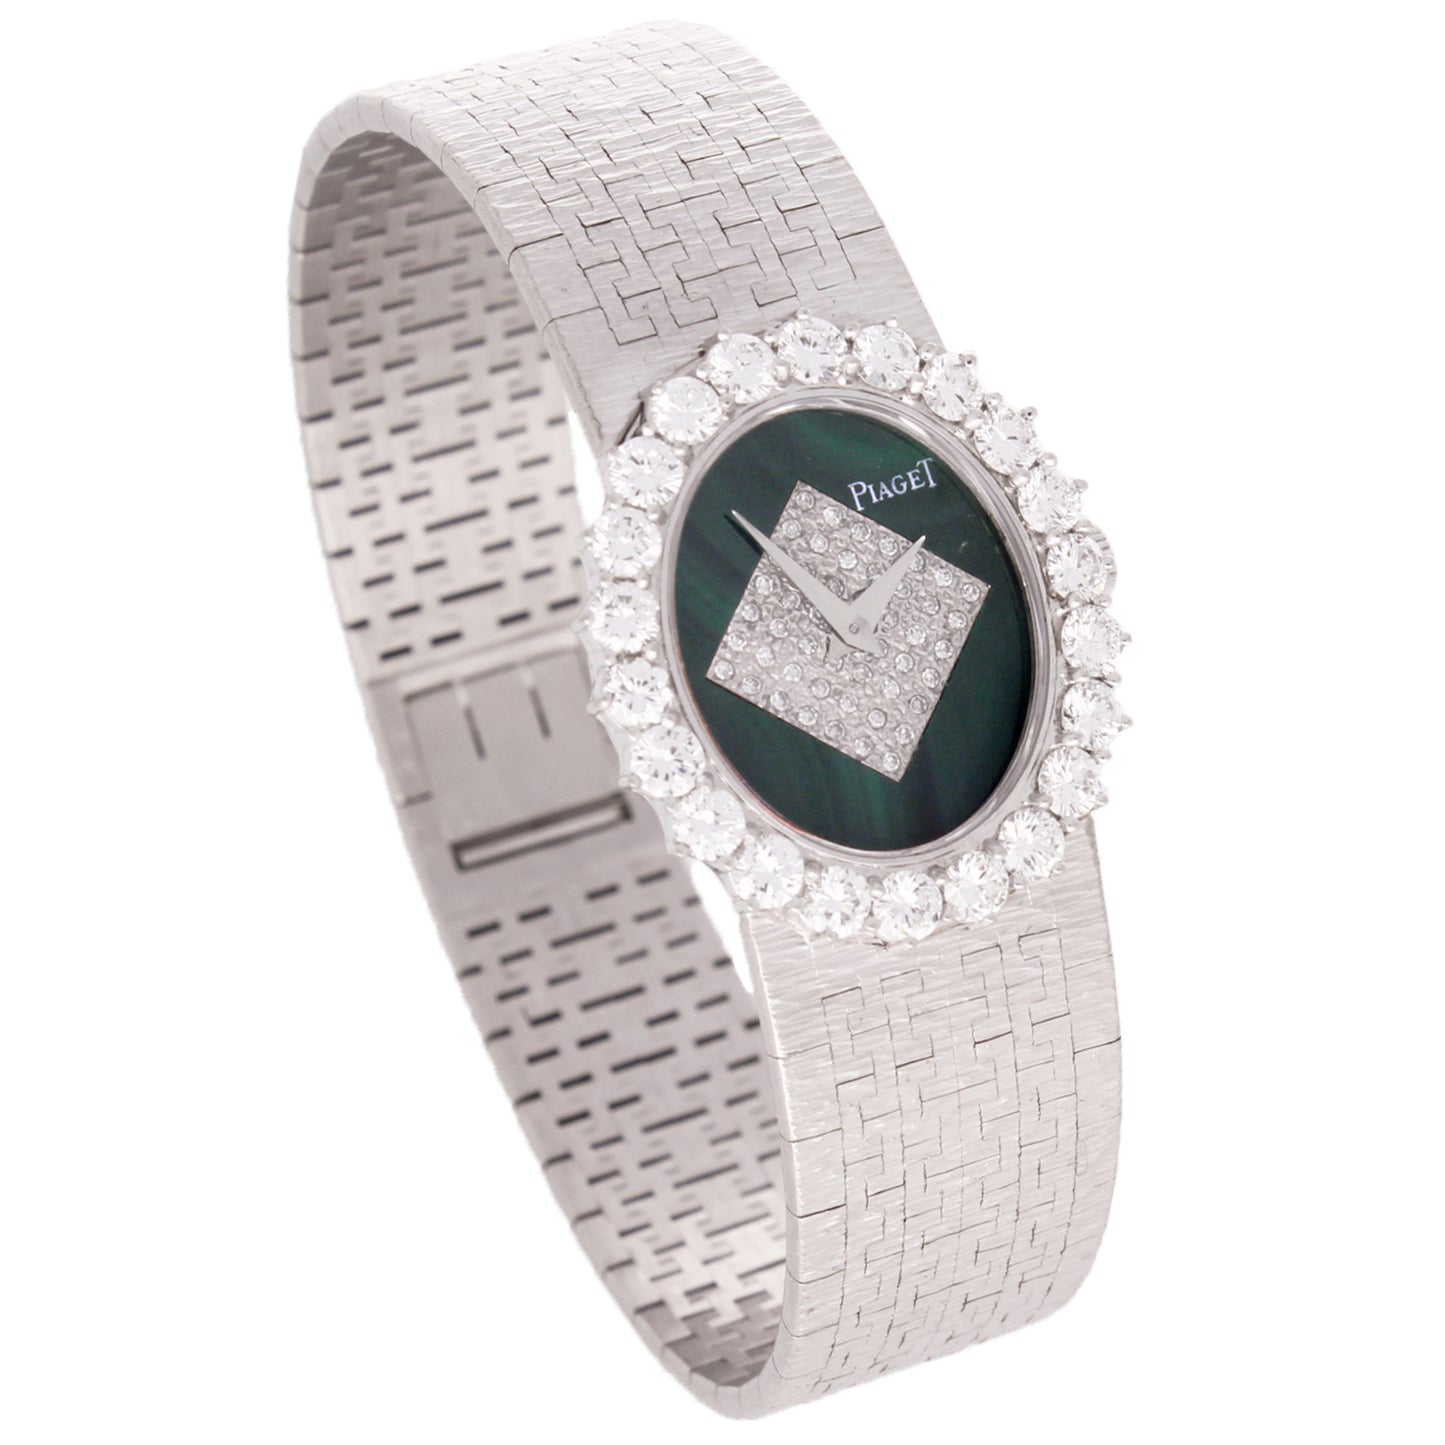 18ct white gold diamond and malachite dial with diamond bezel bracelet watch. Made 1970